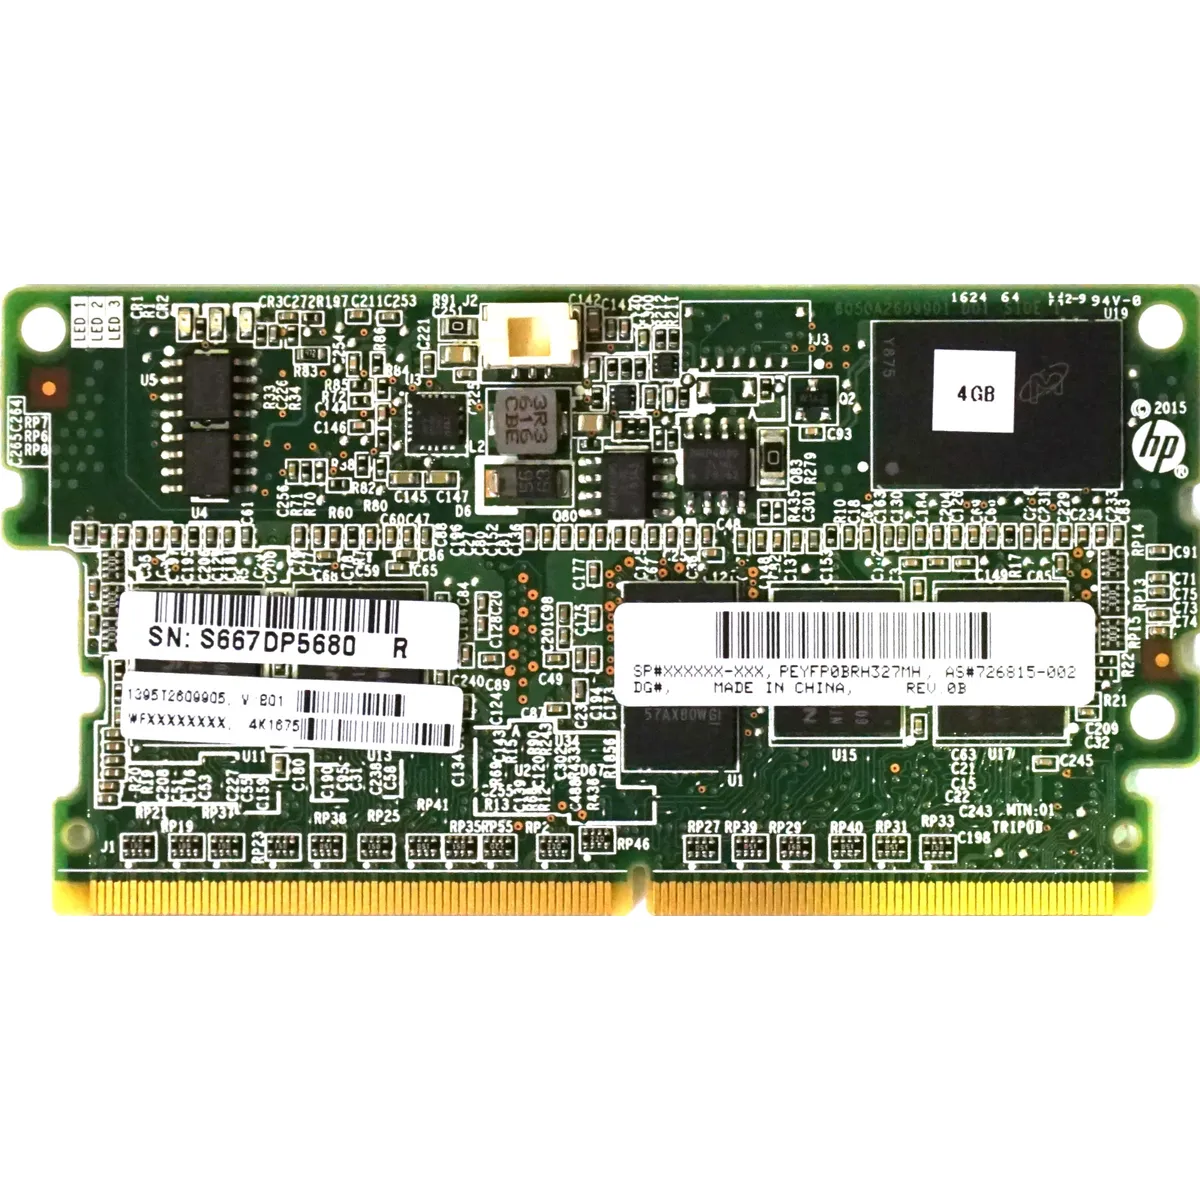 HP Smart Array P440, P840 4GB FBWC Controller Memory